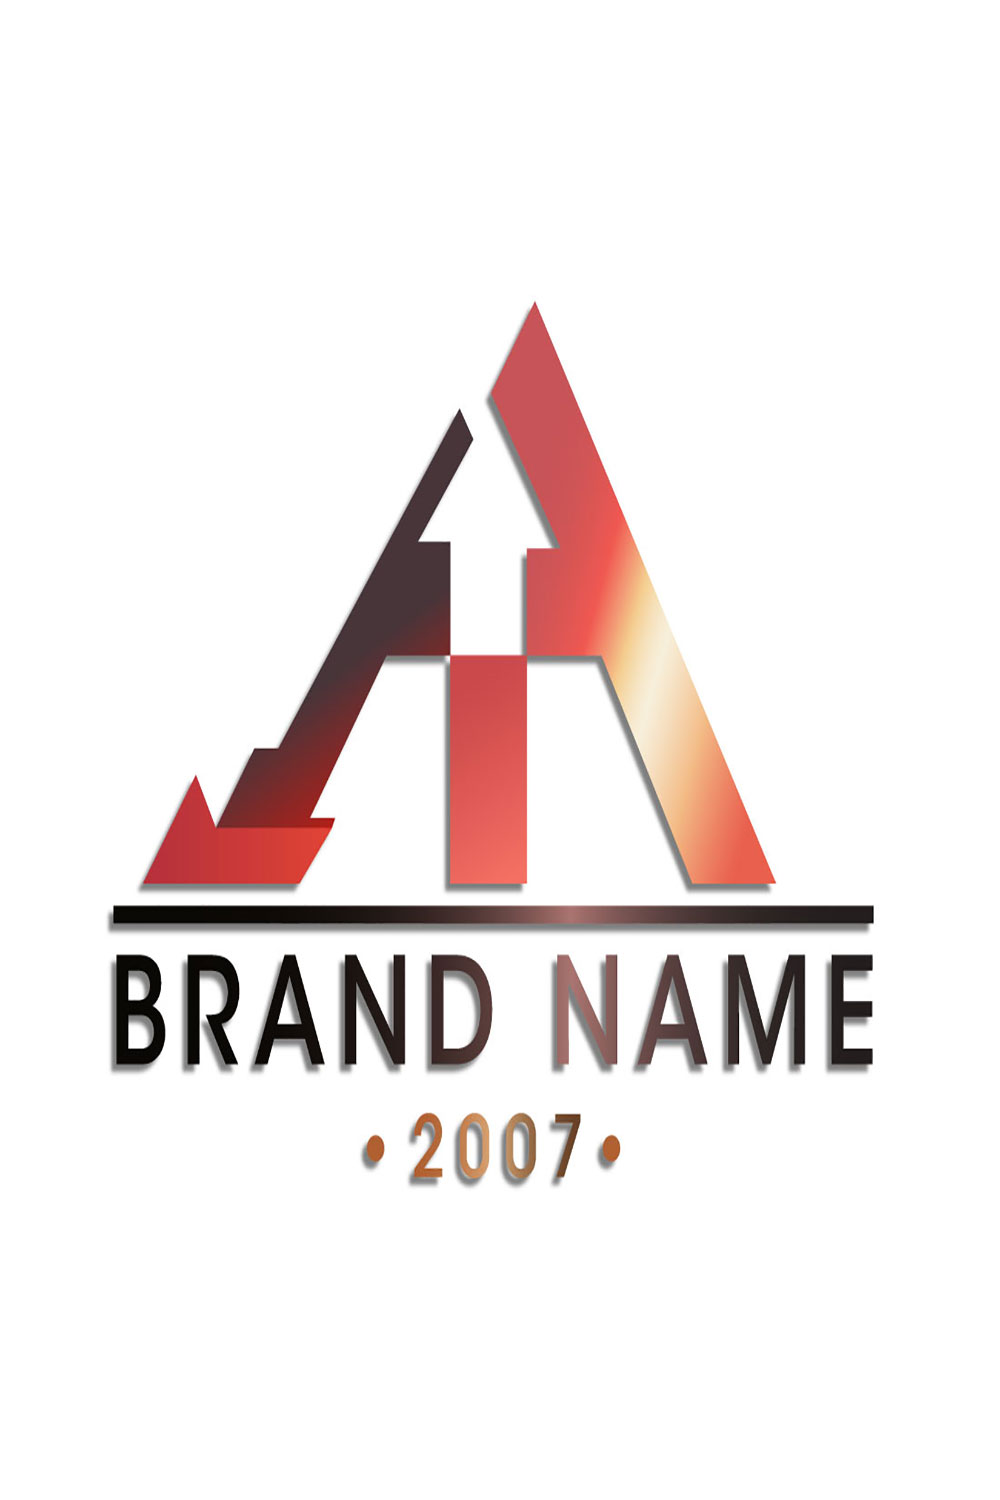 Company logo pinterest preview image.